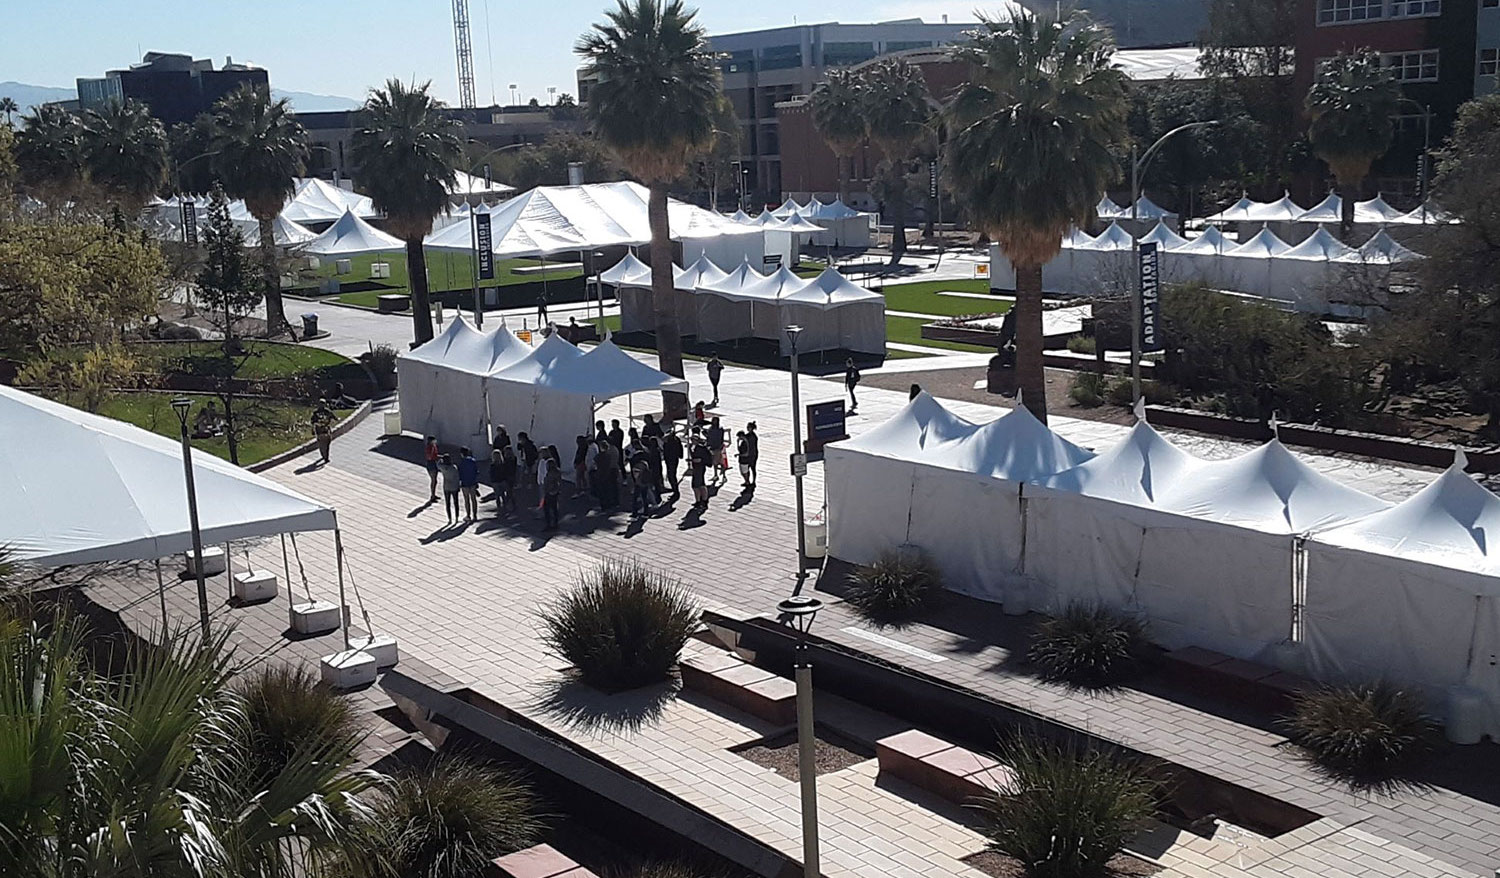 Tucson Festival of Books tents return to the University of Arizona mall.